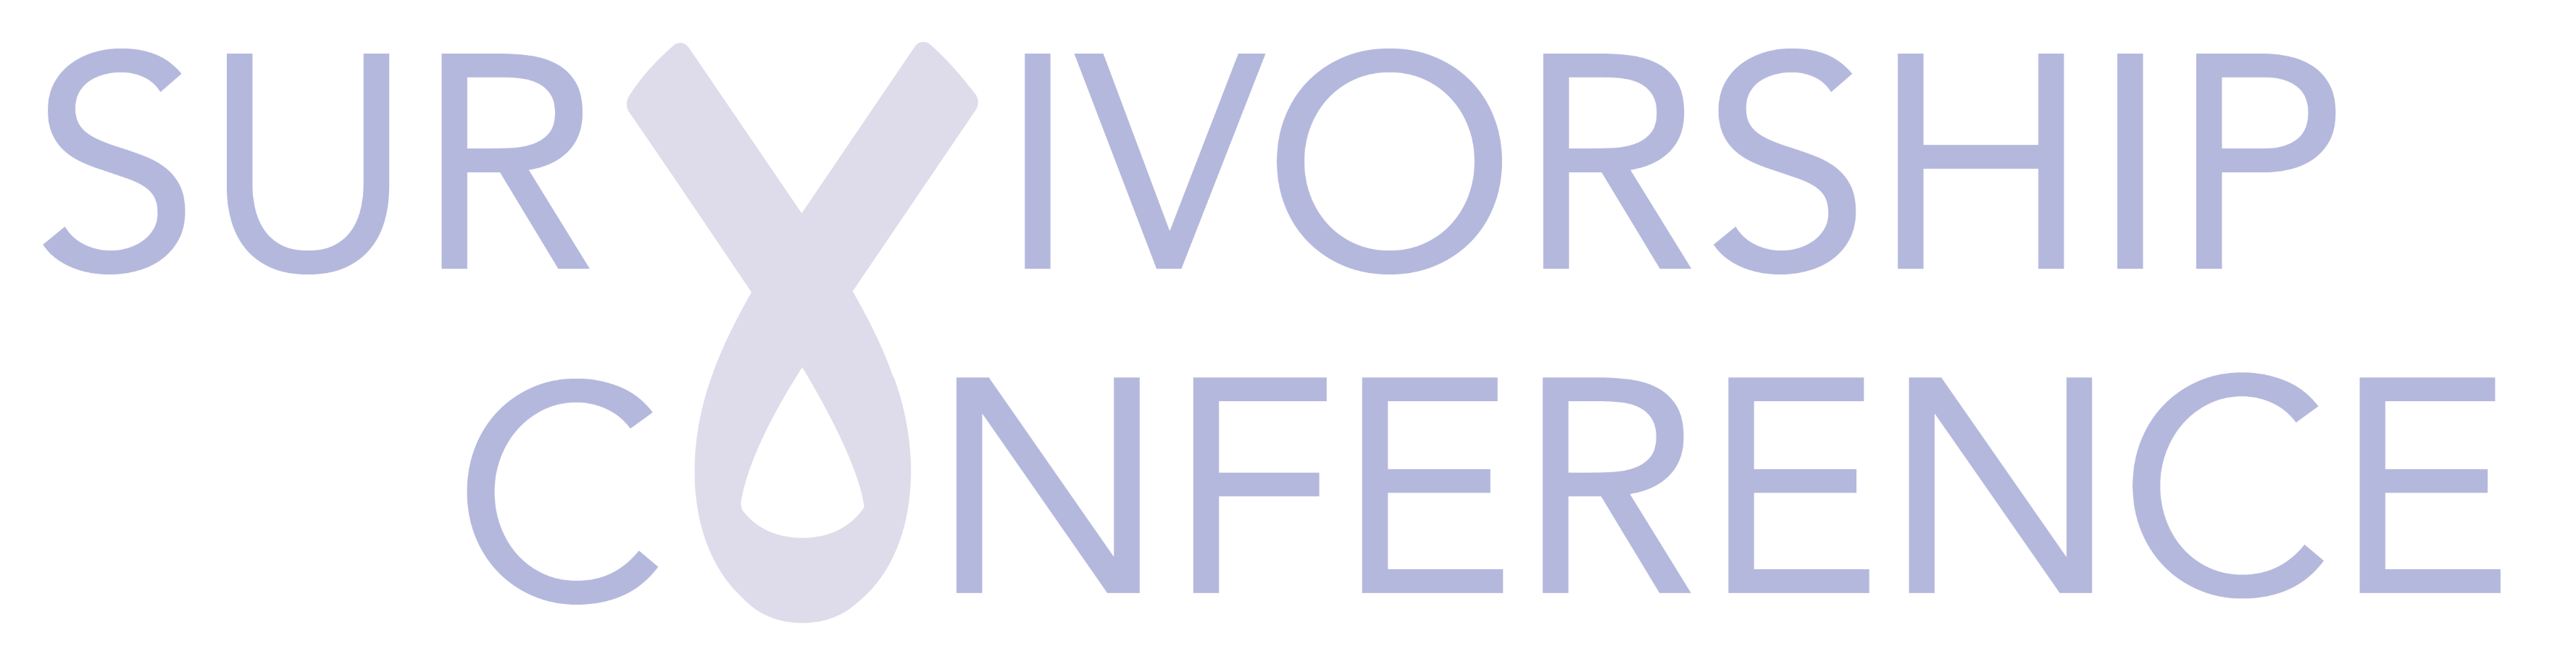 Survivorship Conference Logo